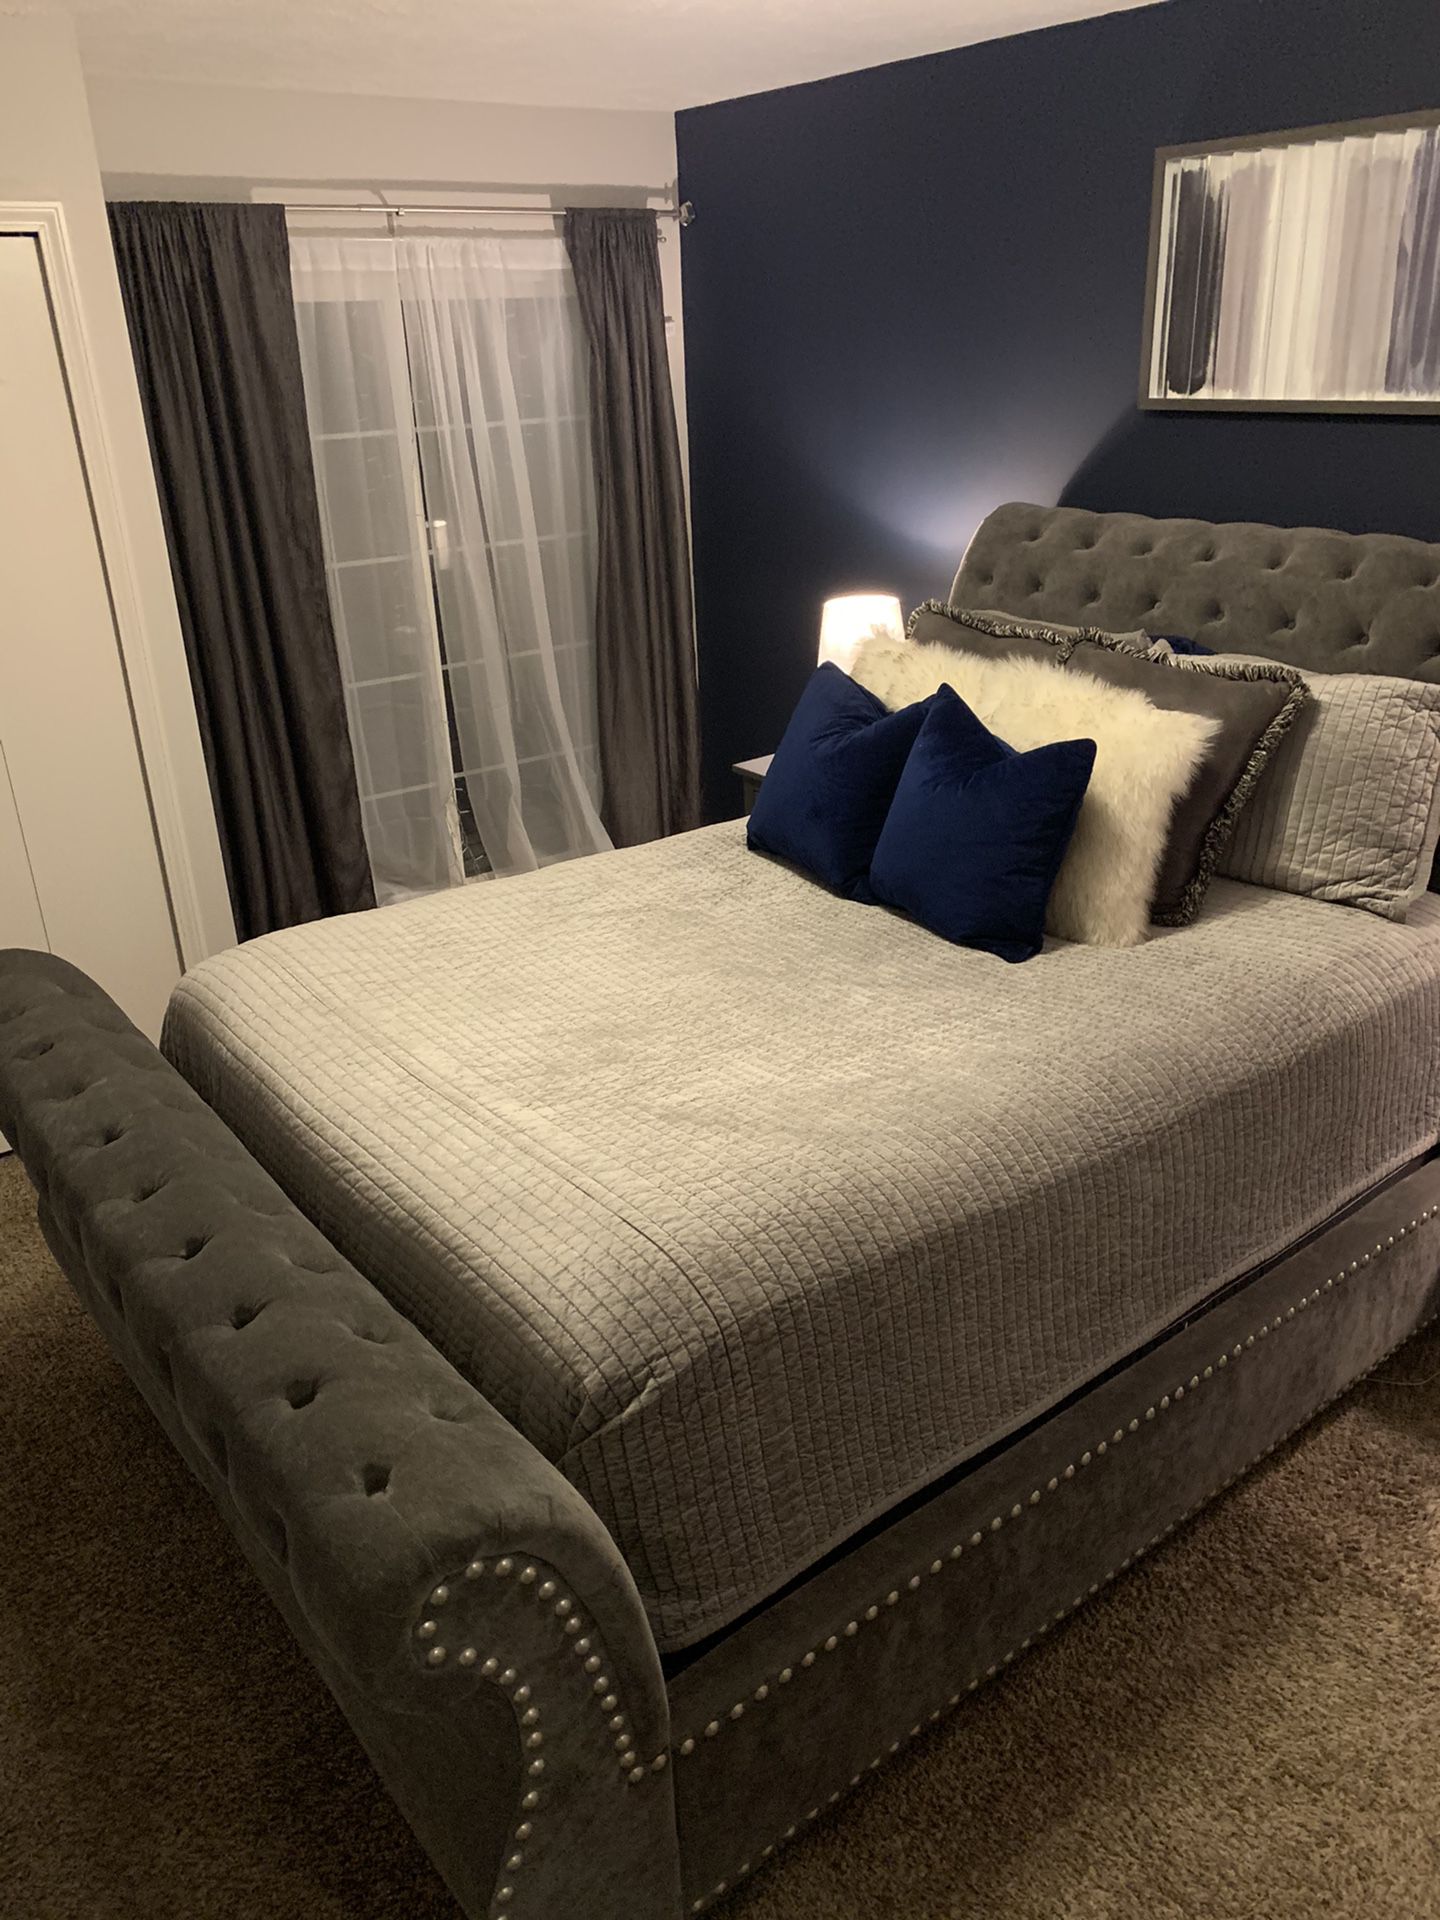 Sleigh bed queen size. Just frame not the mattress.